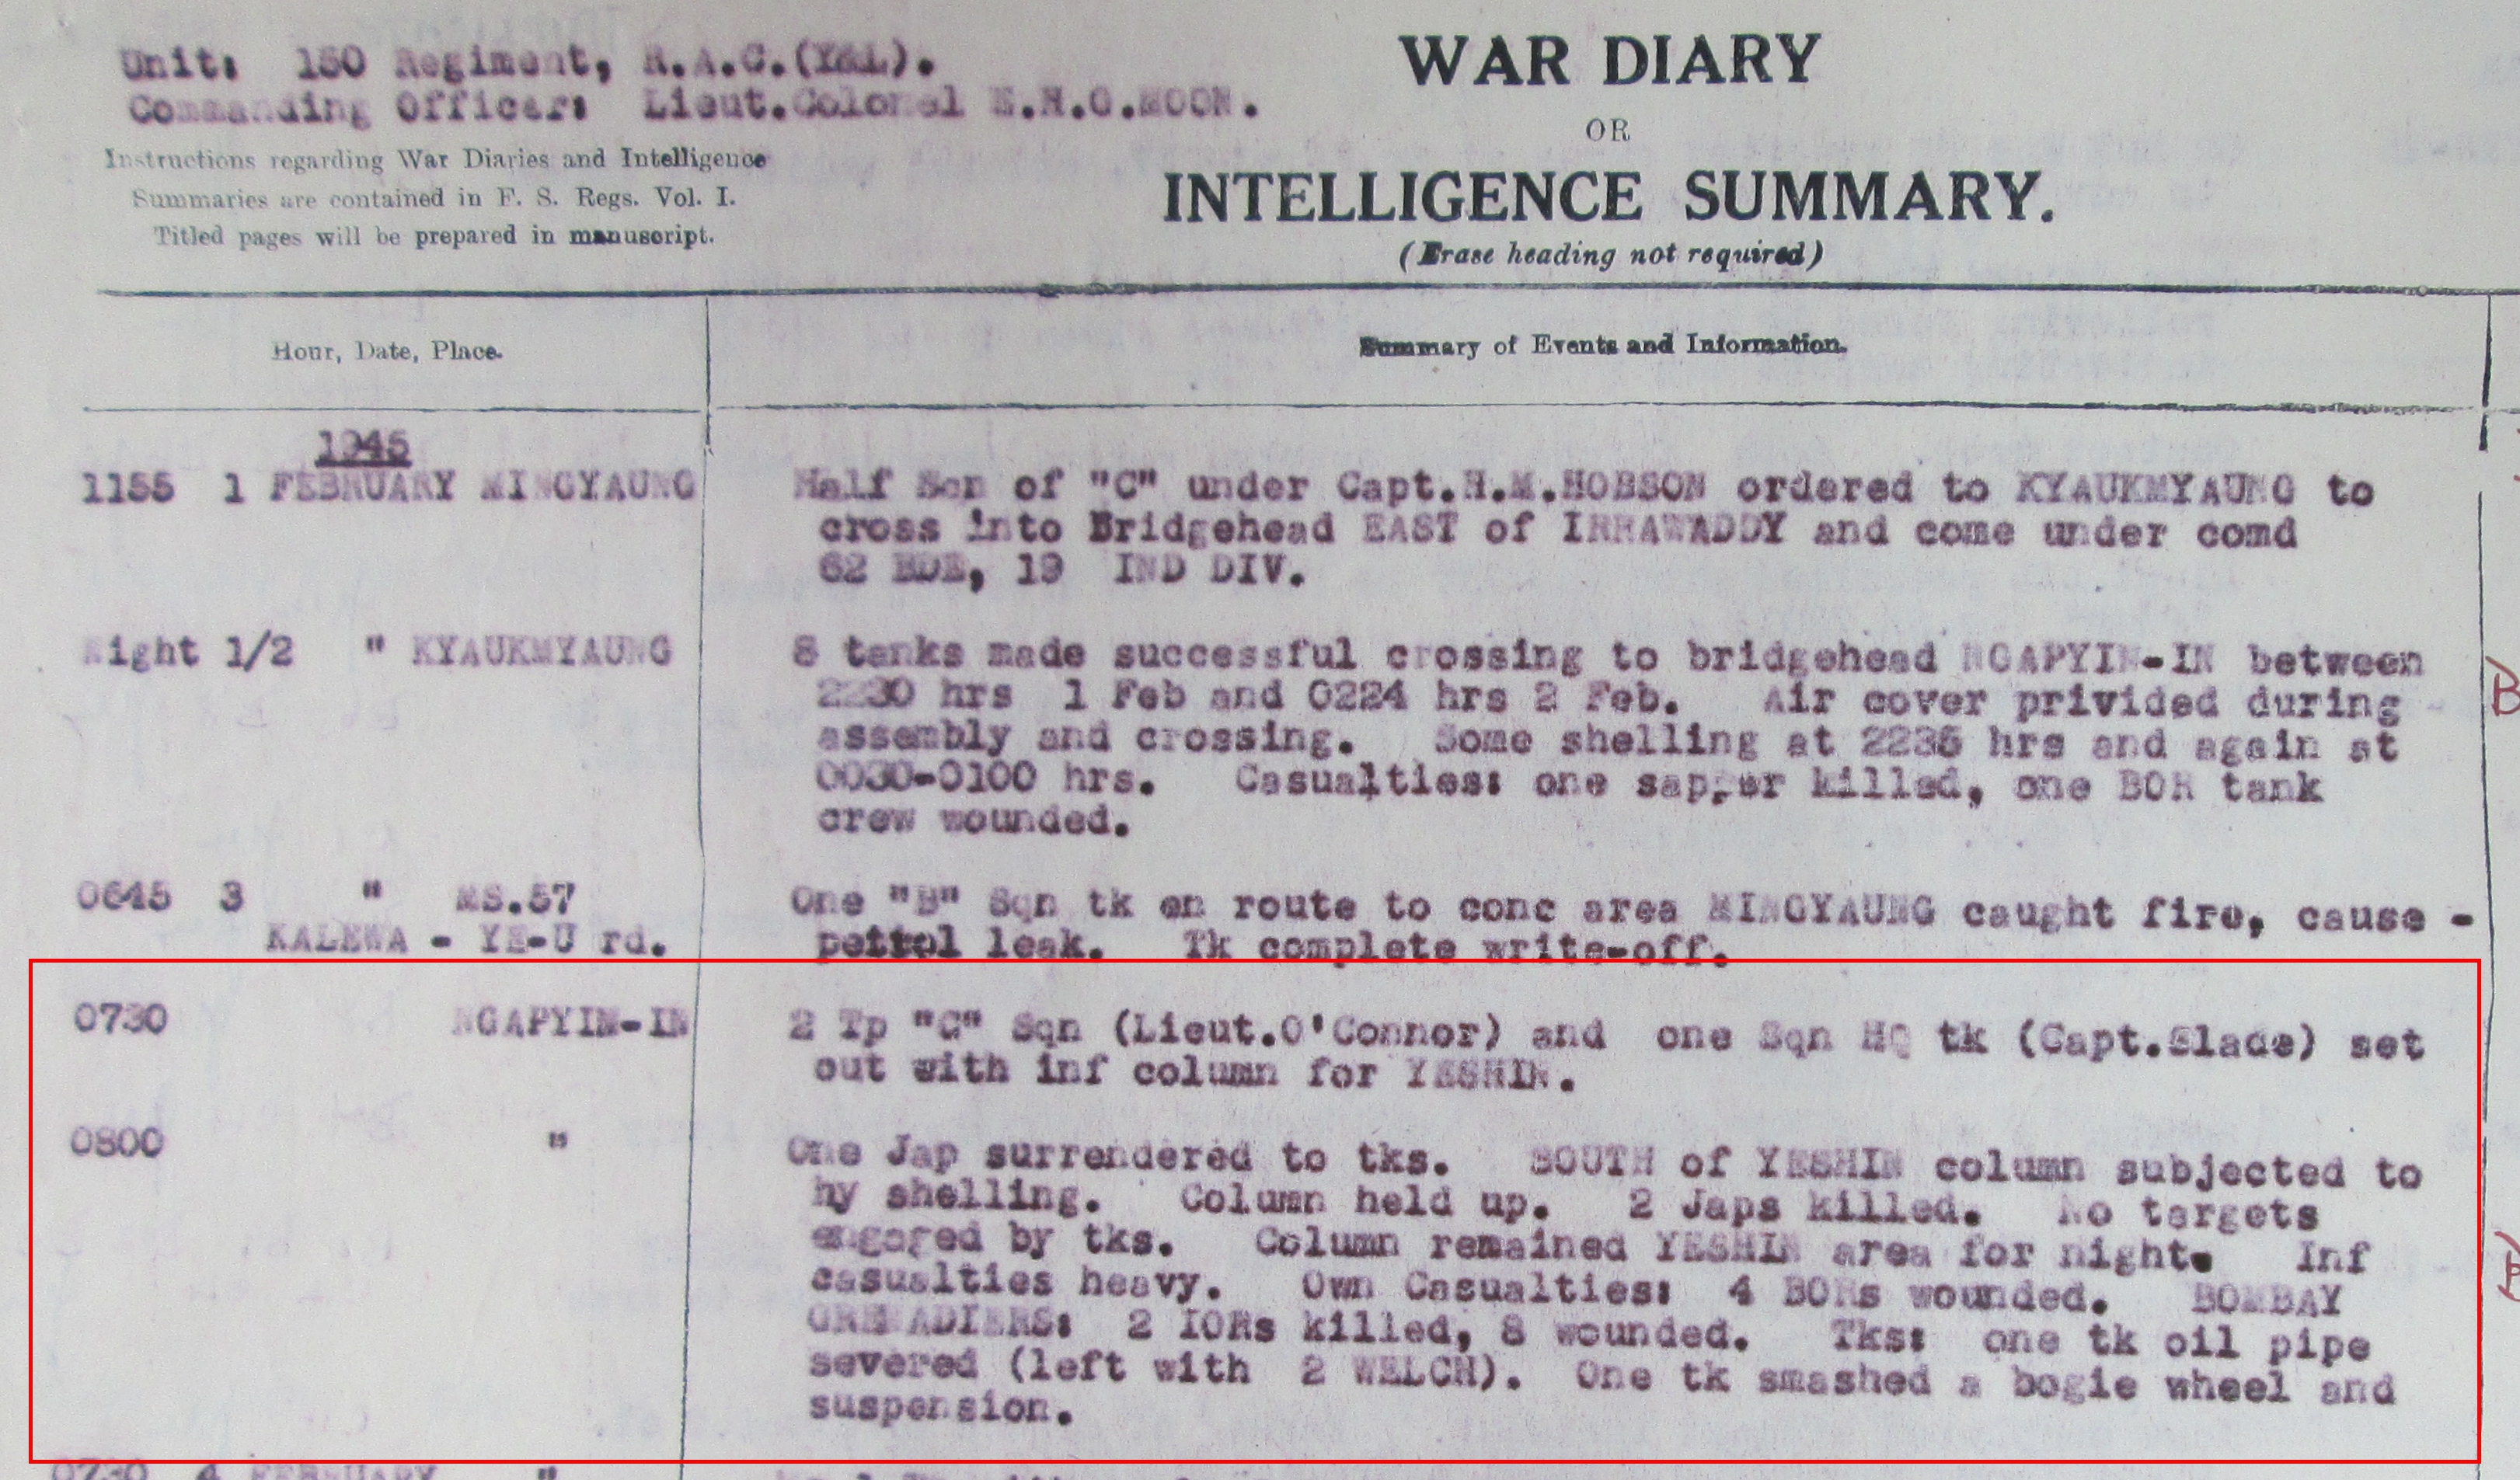 War diary 150th Regiment, R.A.C. - February 1945